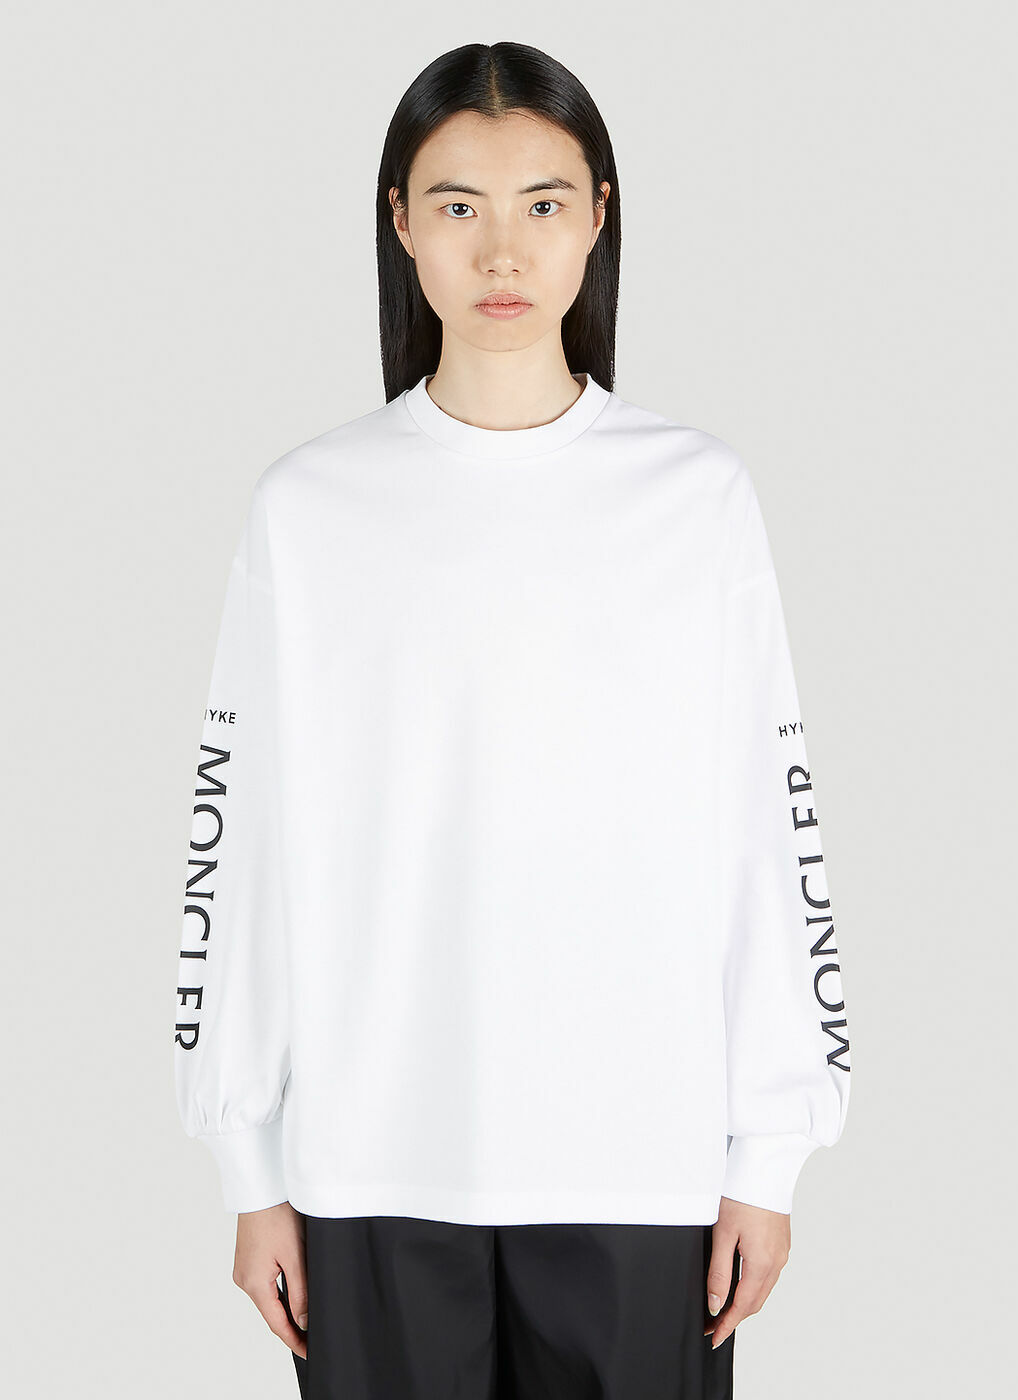 4 Moncler Hyke - Logo Print Long Sleeve T-Shirt in White